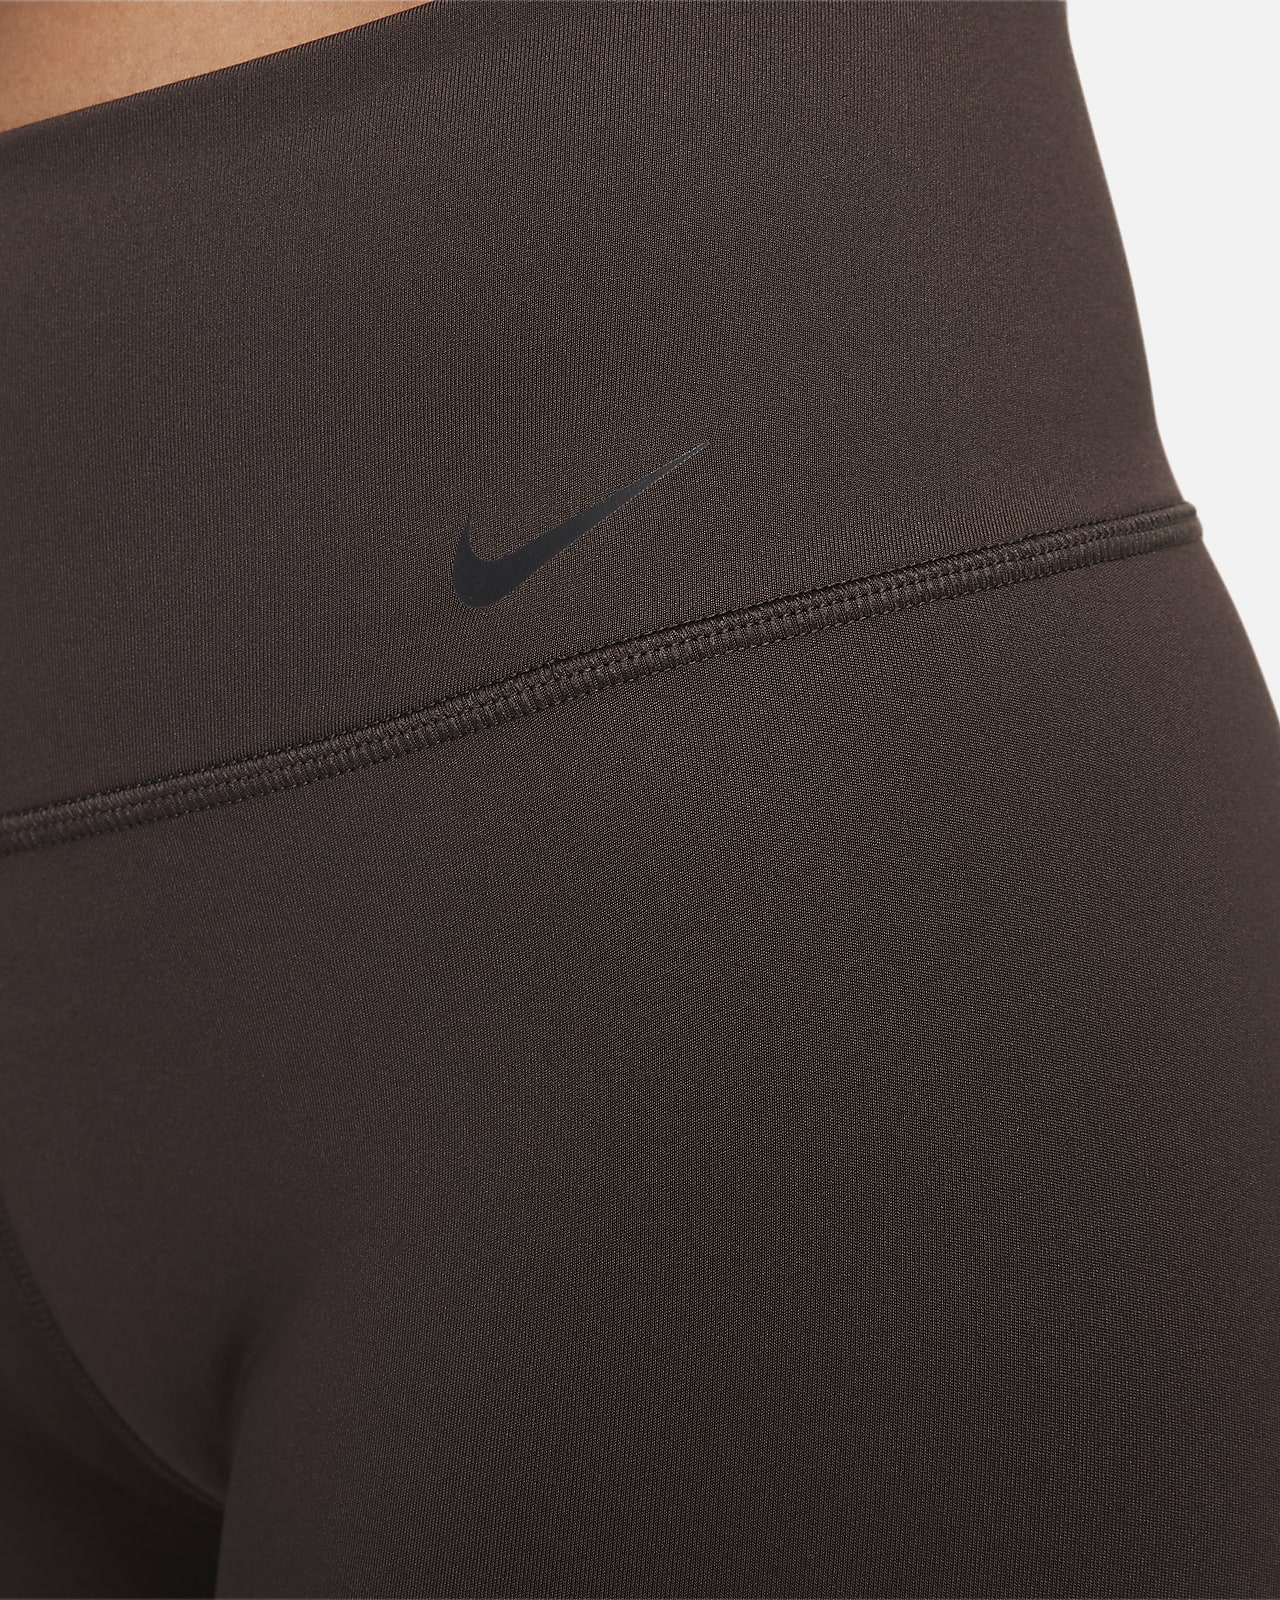 Nike Power Classic Long Pants Grey